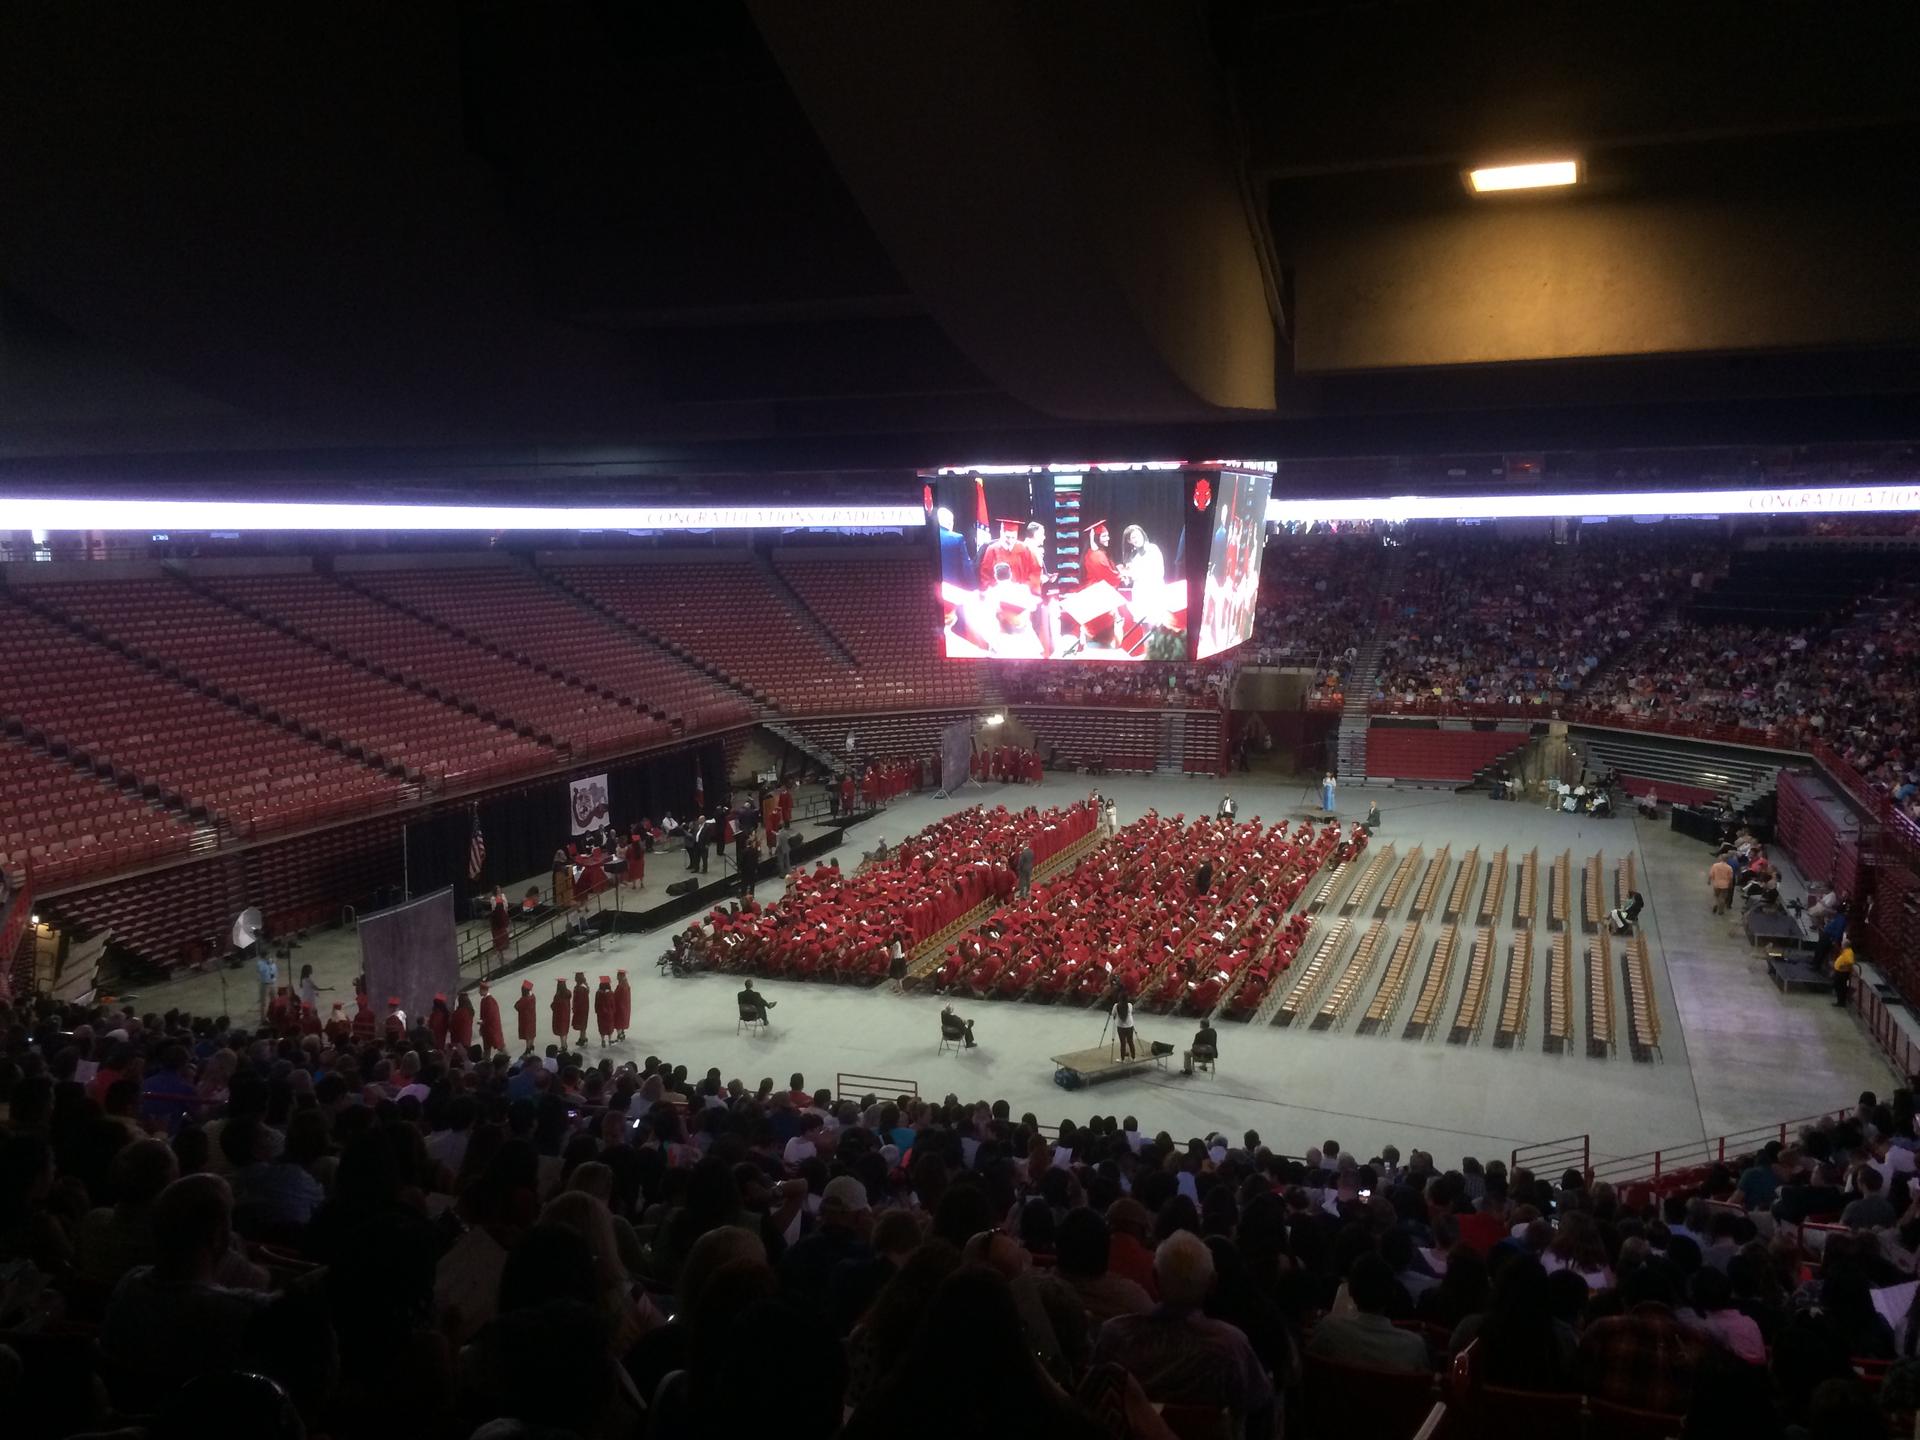 A big screen above a high school graduation ceremony in a stadium